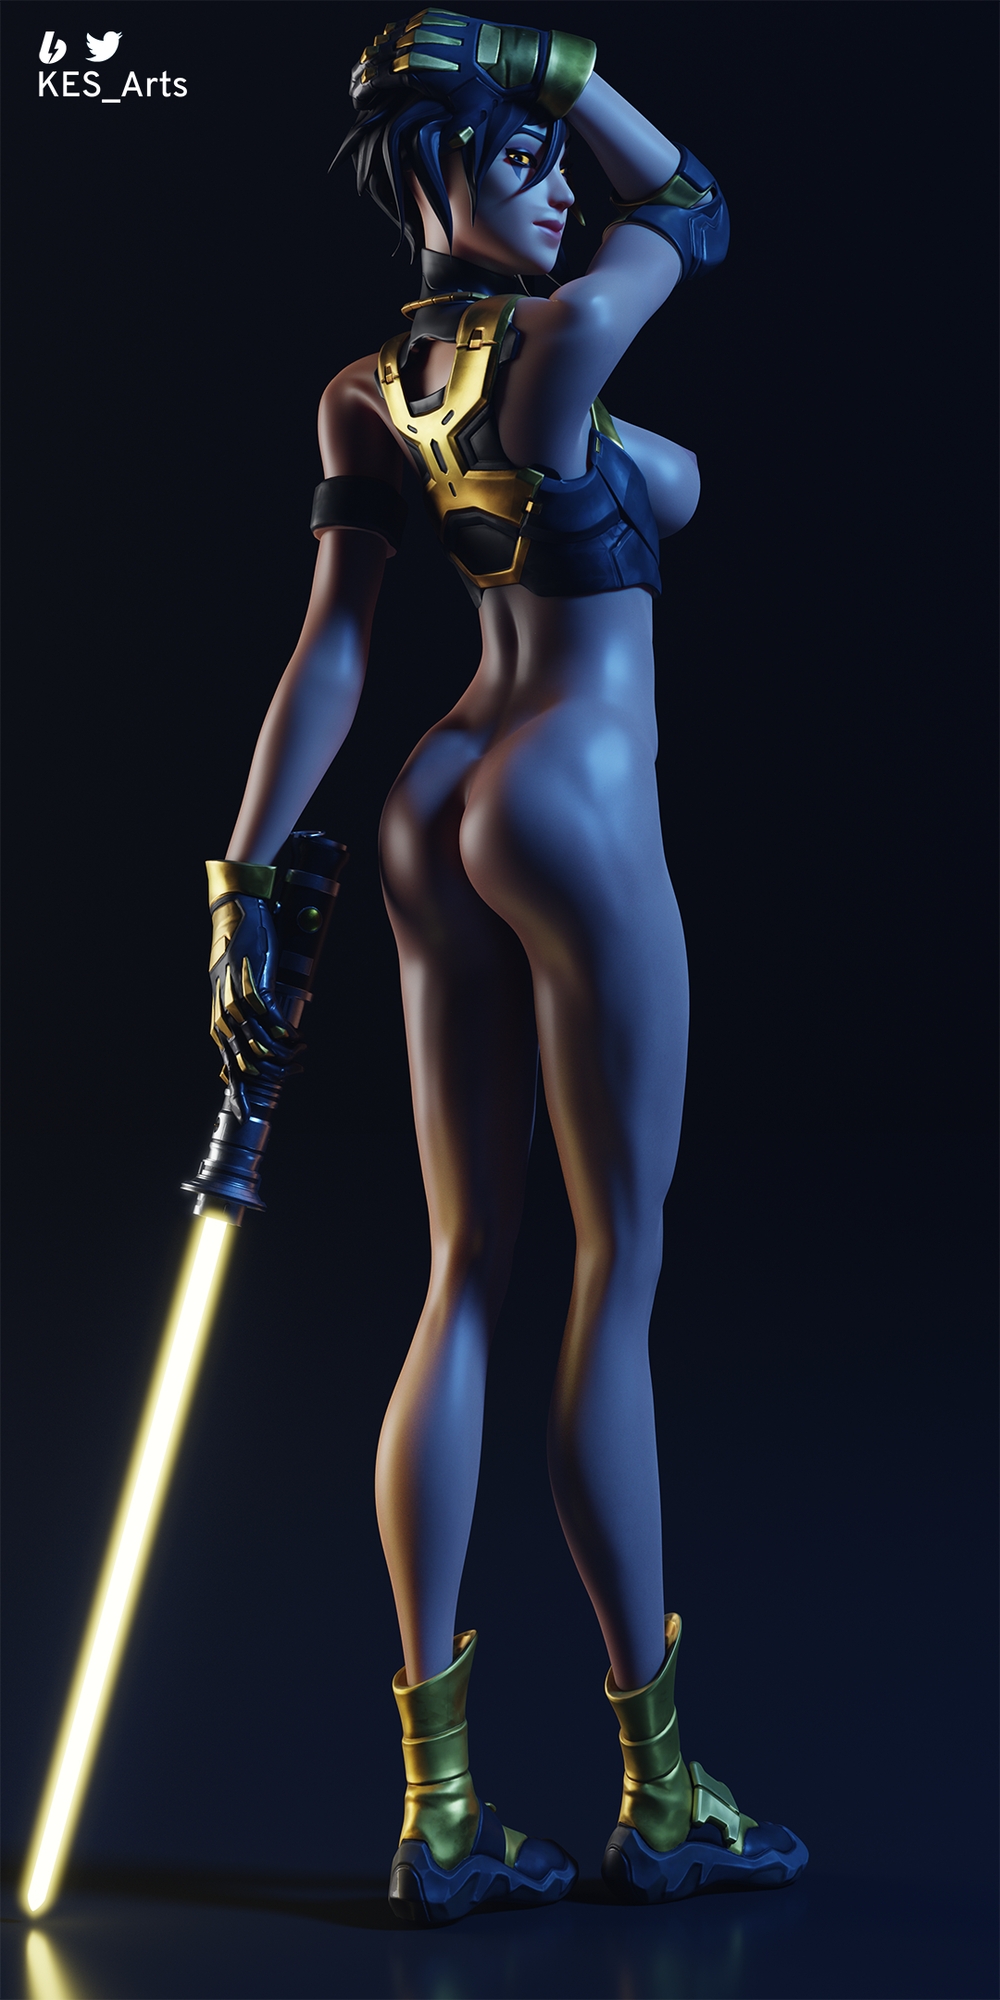 Fortnithe Hush as Jedi Starwars Fortnite Hush Sexy Boobs Natural Boobs Natural Tits Rule34 Ass Fit Legs Long Legs